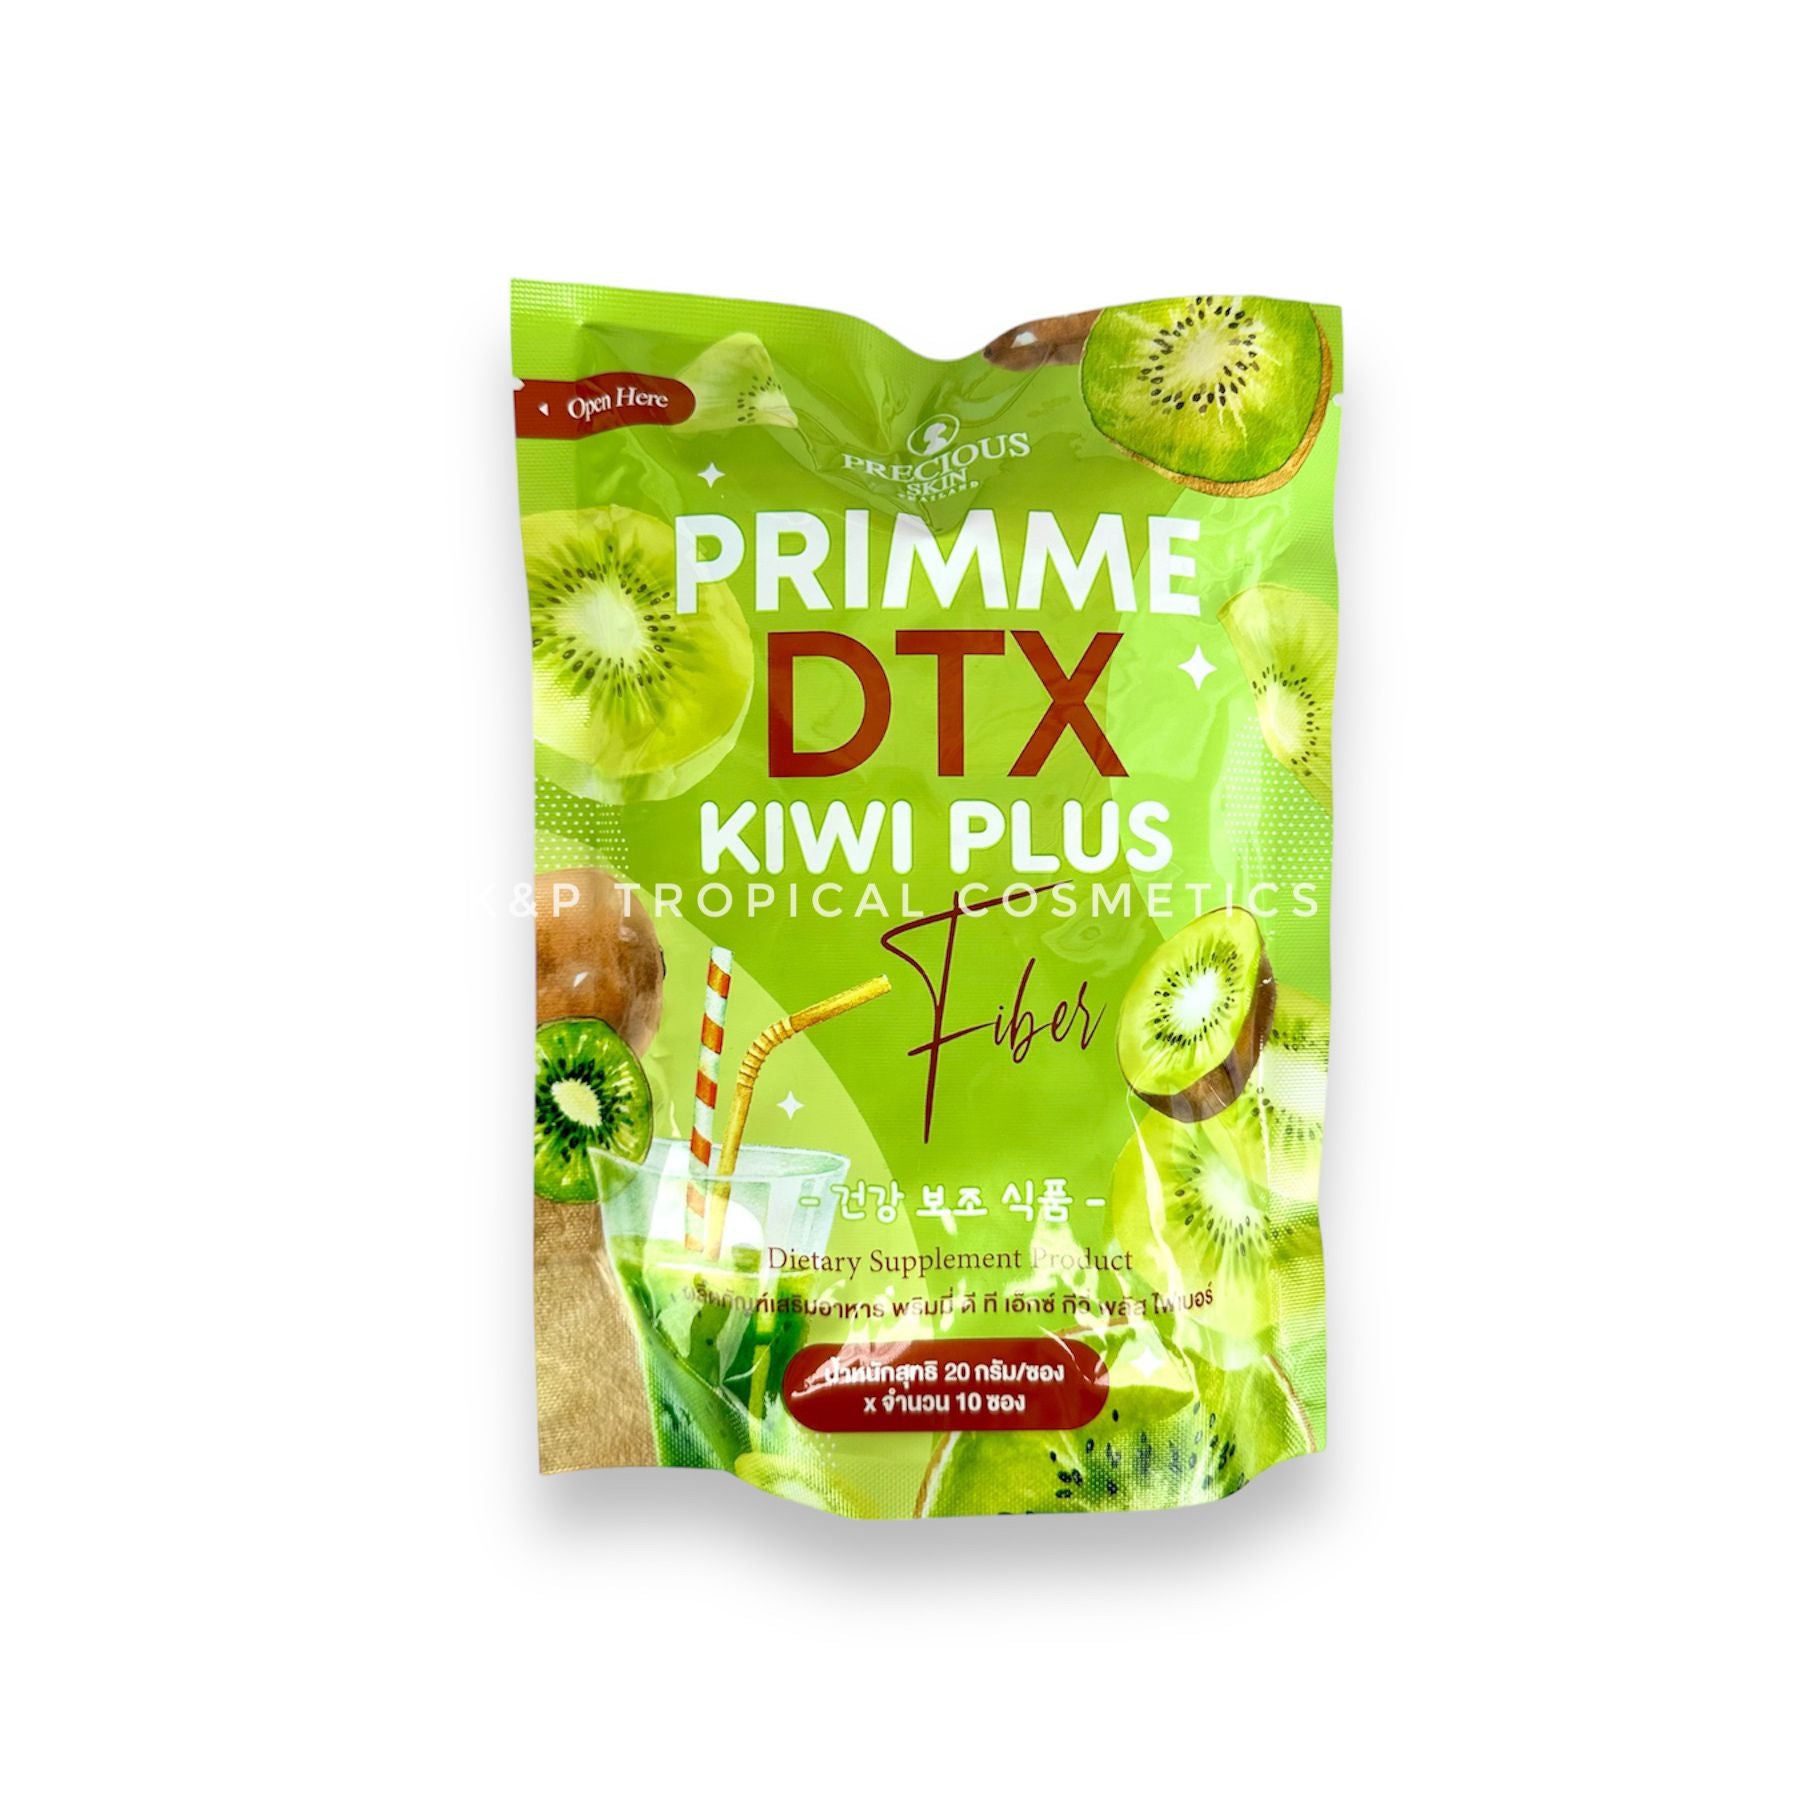 PRECIOUS SKIN Primme DTX Kiwi Plus Fiber 20 g.*10 sachets, Напиток на основе экстракта киви для очищения организма 20 гр.*10 саше